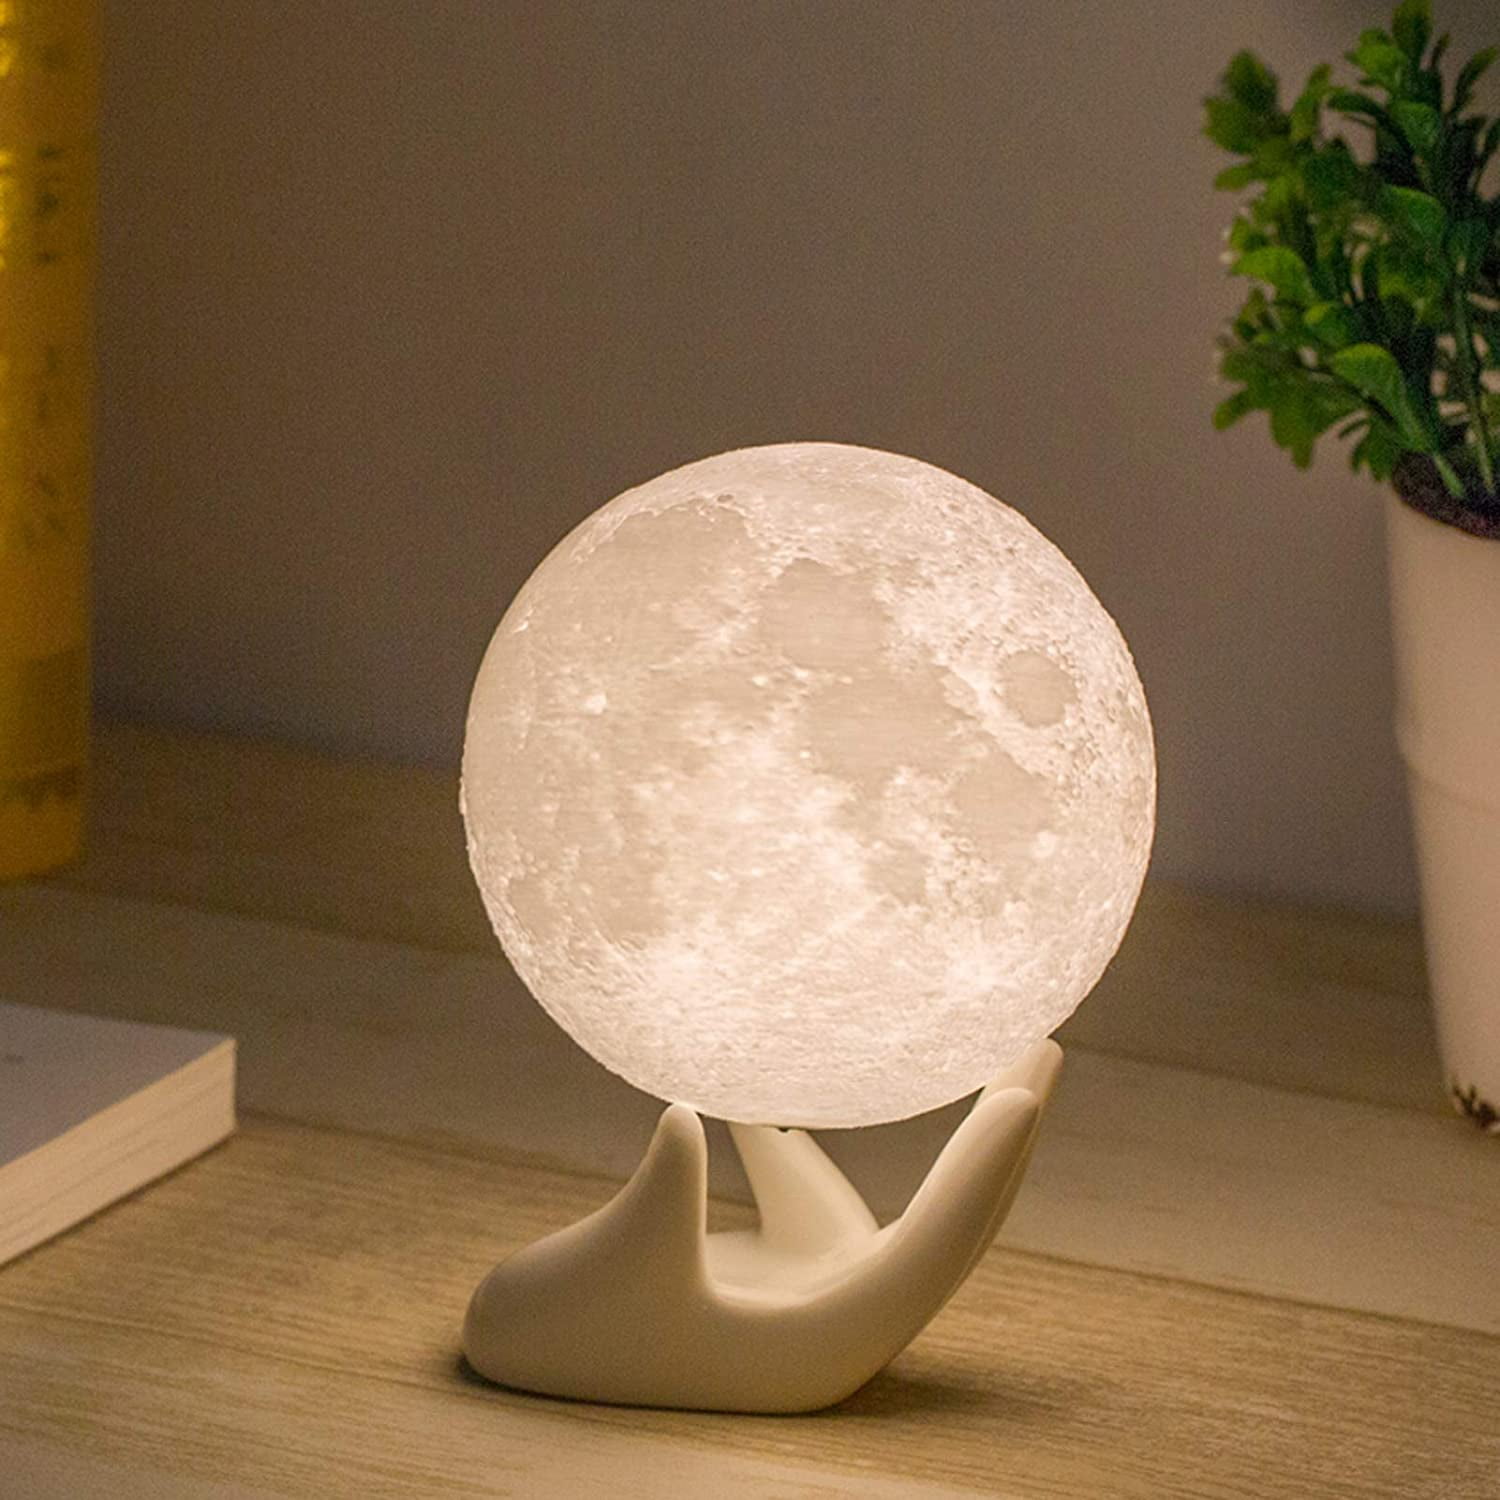 Lunar Moon Table Light Lamp Moonlight Mood Lighting Birthday Holiday Party Gift 